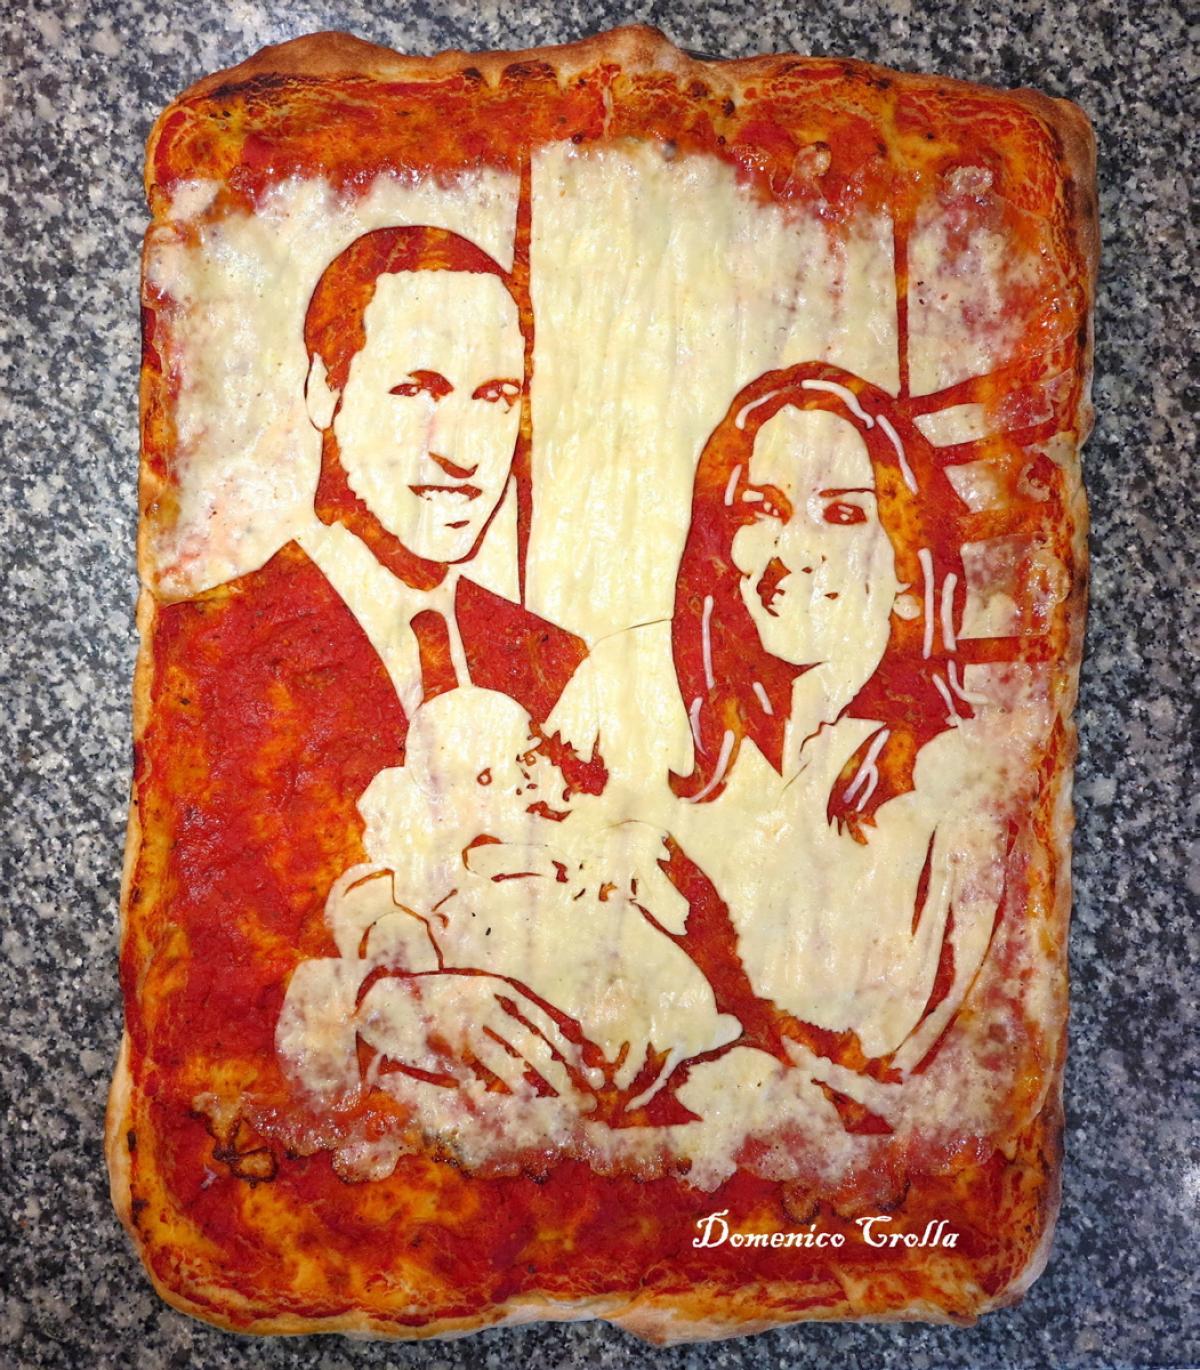 chef conquista instagram con retratos en pizzas prince william kate middletona george pizza portrait